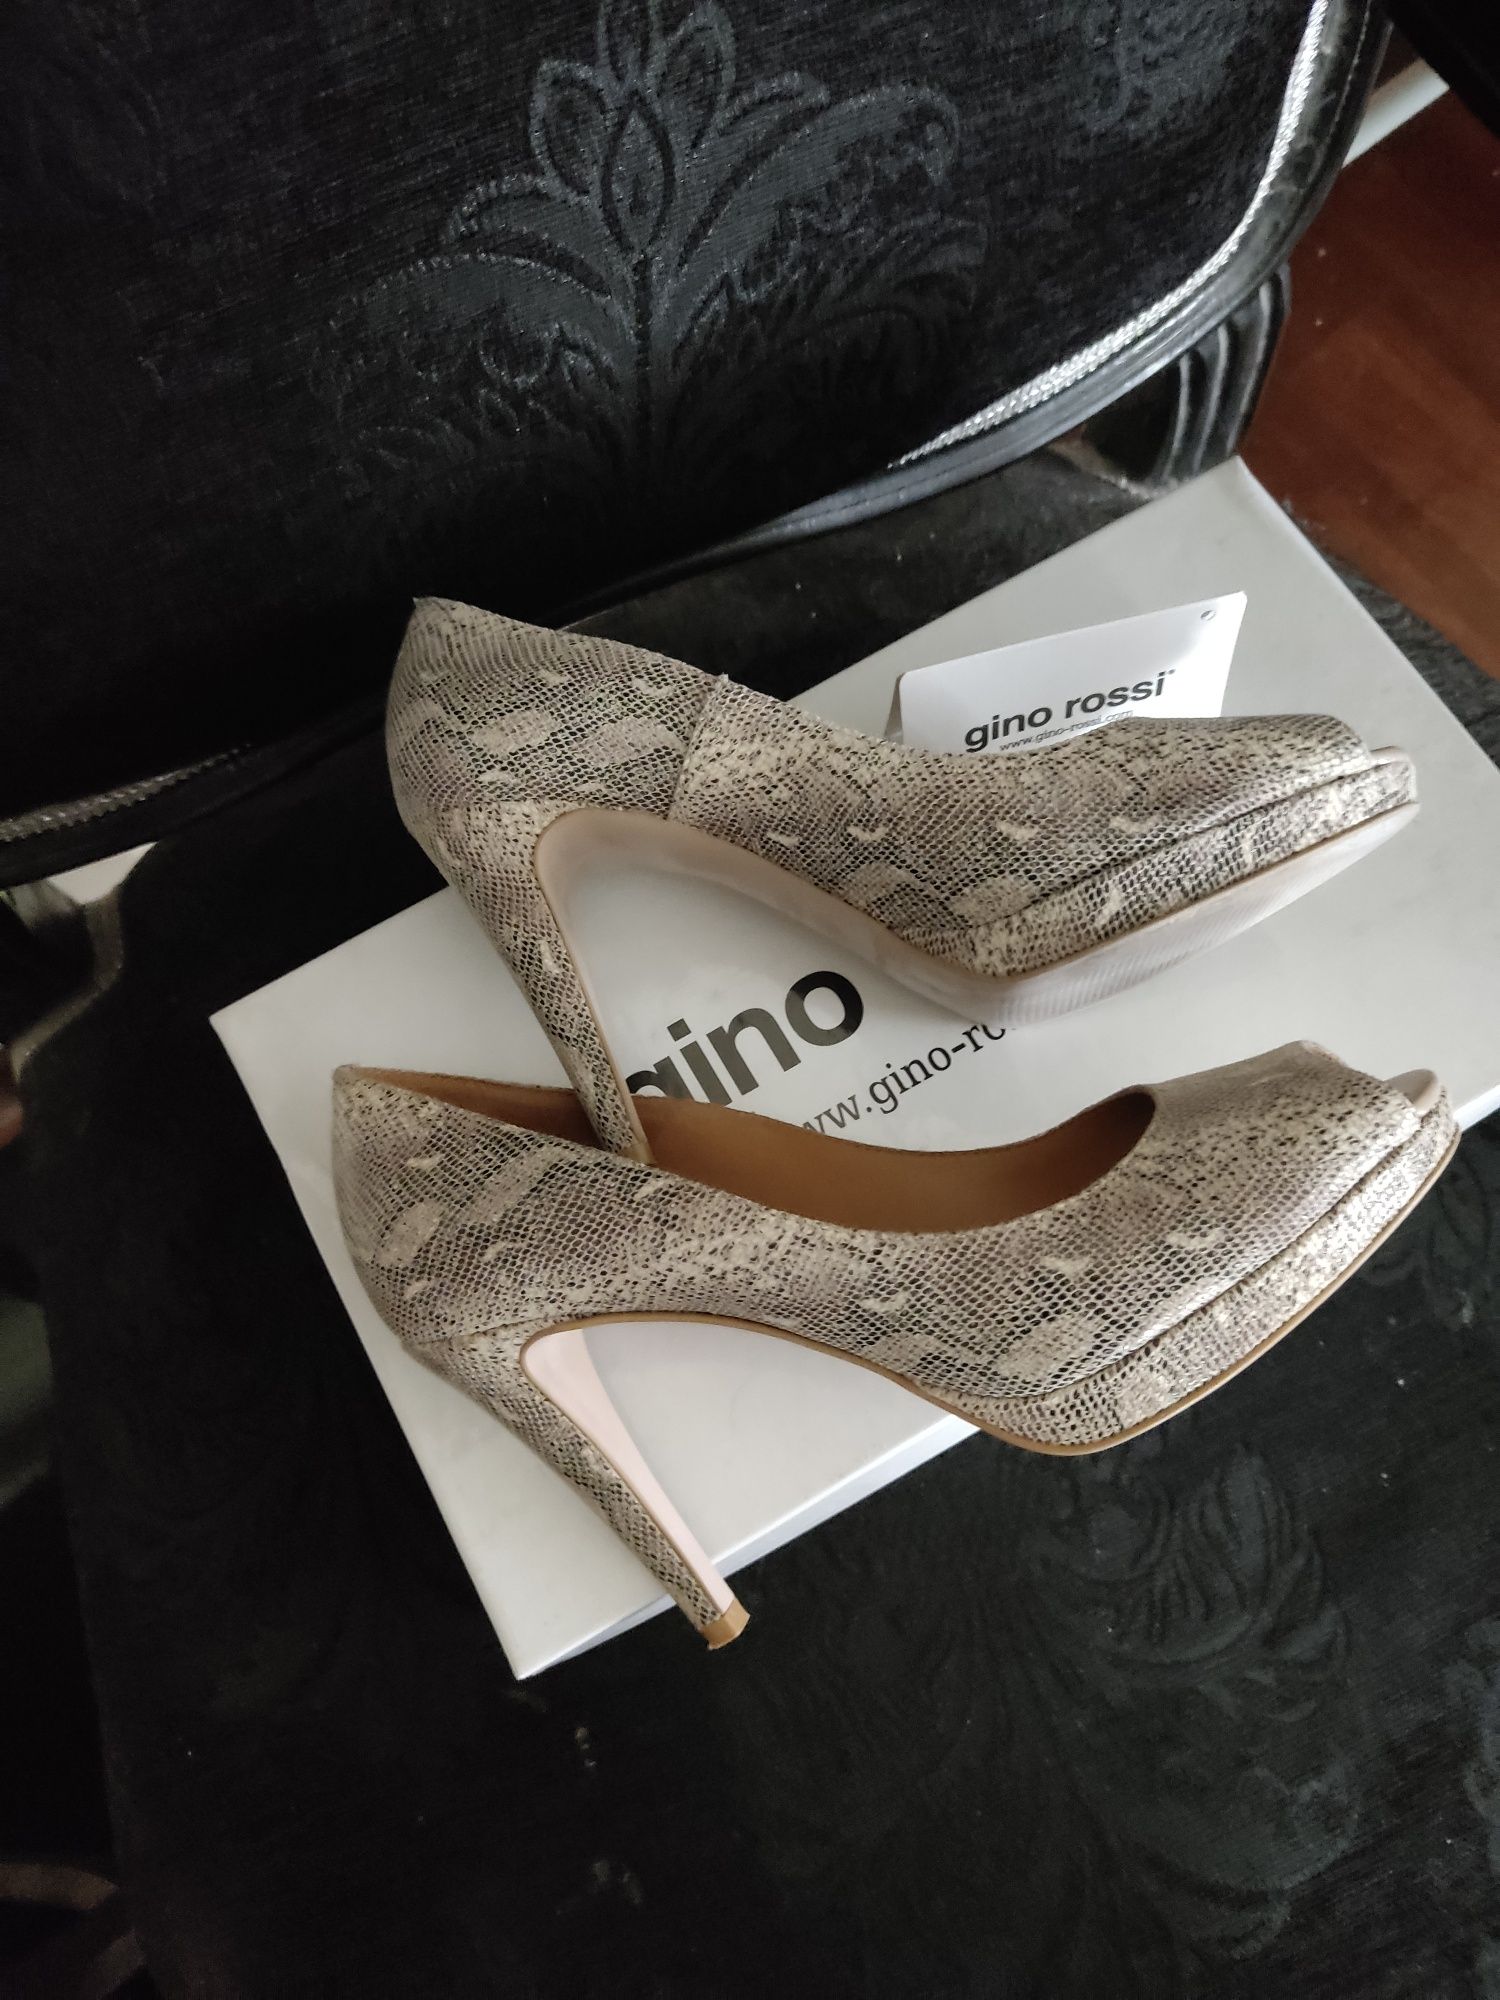 Елегантни обувки. Gino rossi